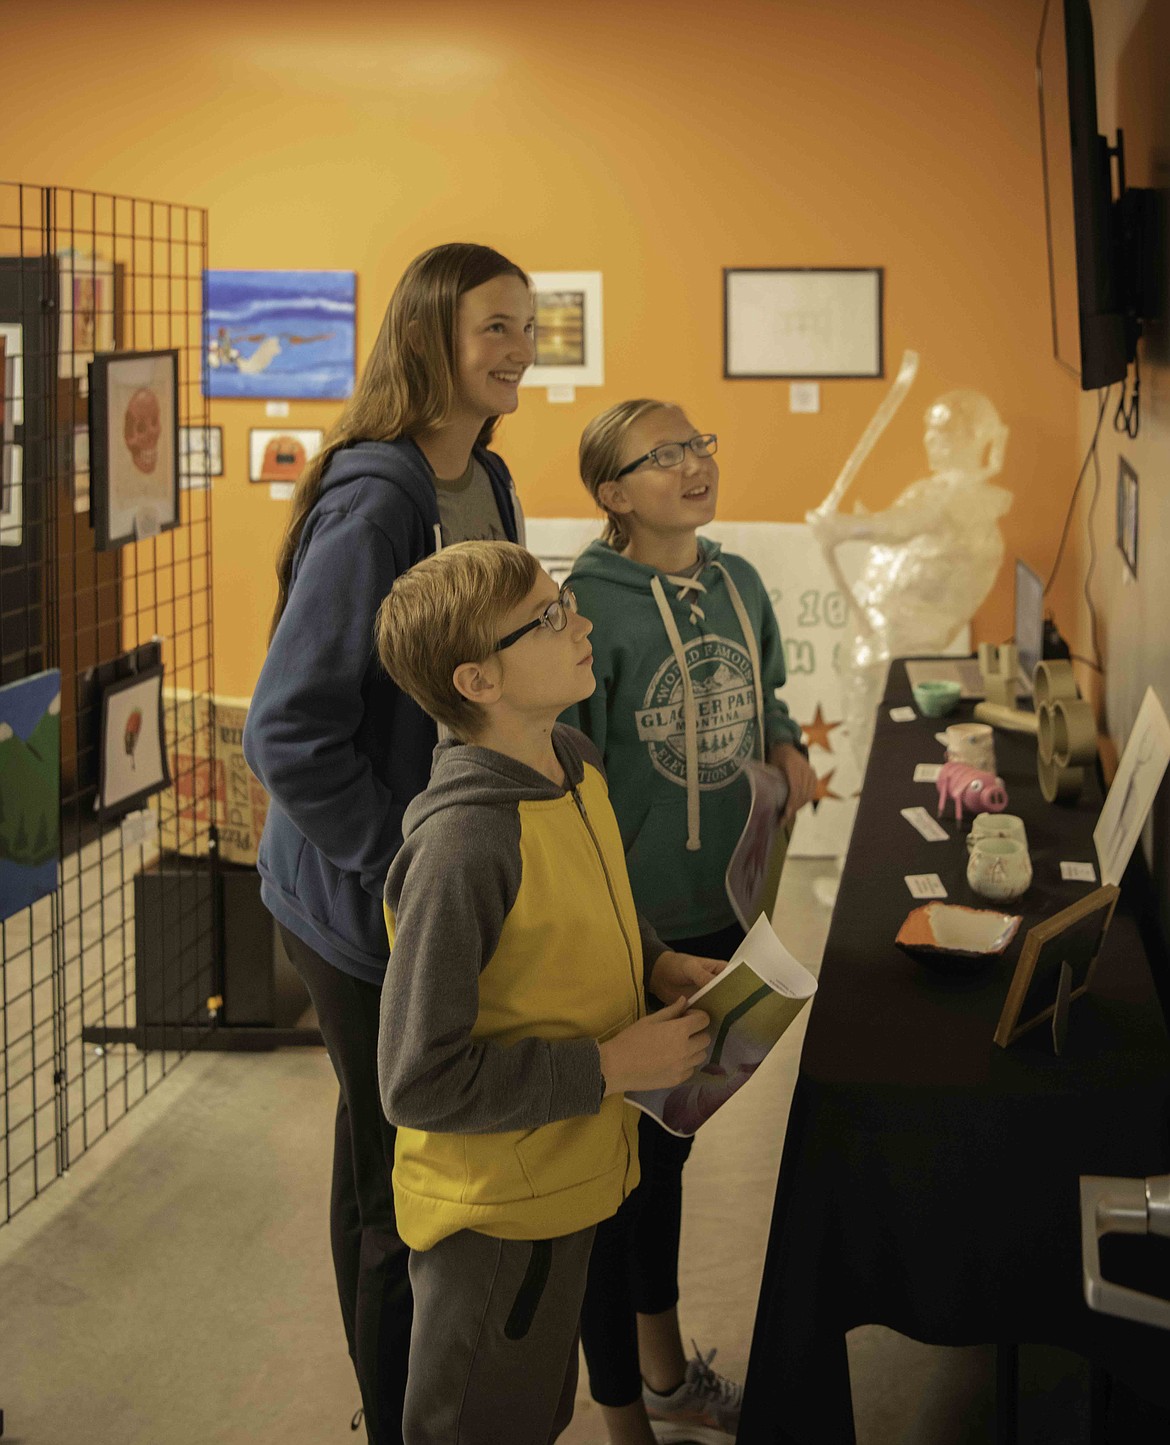 Emory Ercanbrack and Kalem Ercanbrack admire displays at the art show.